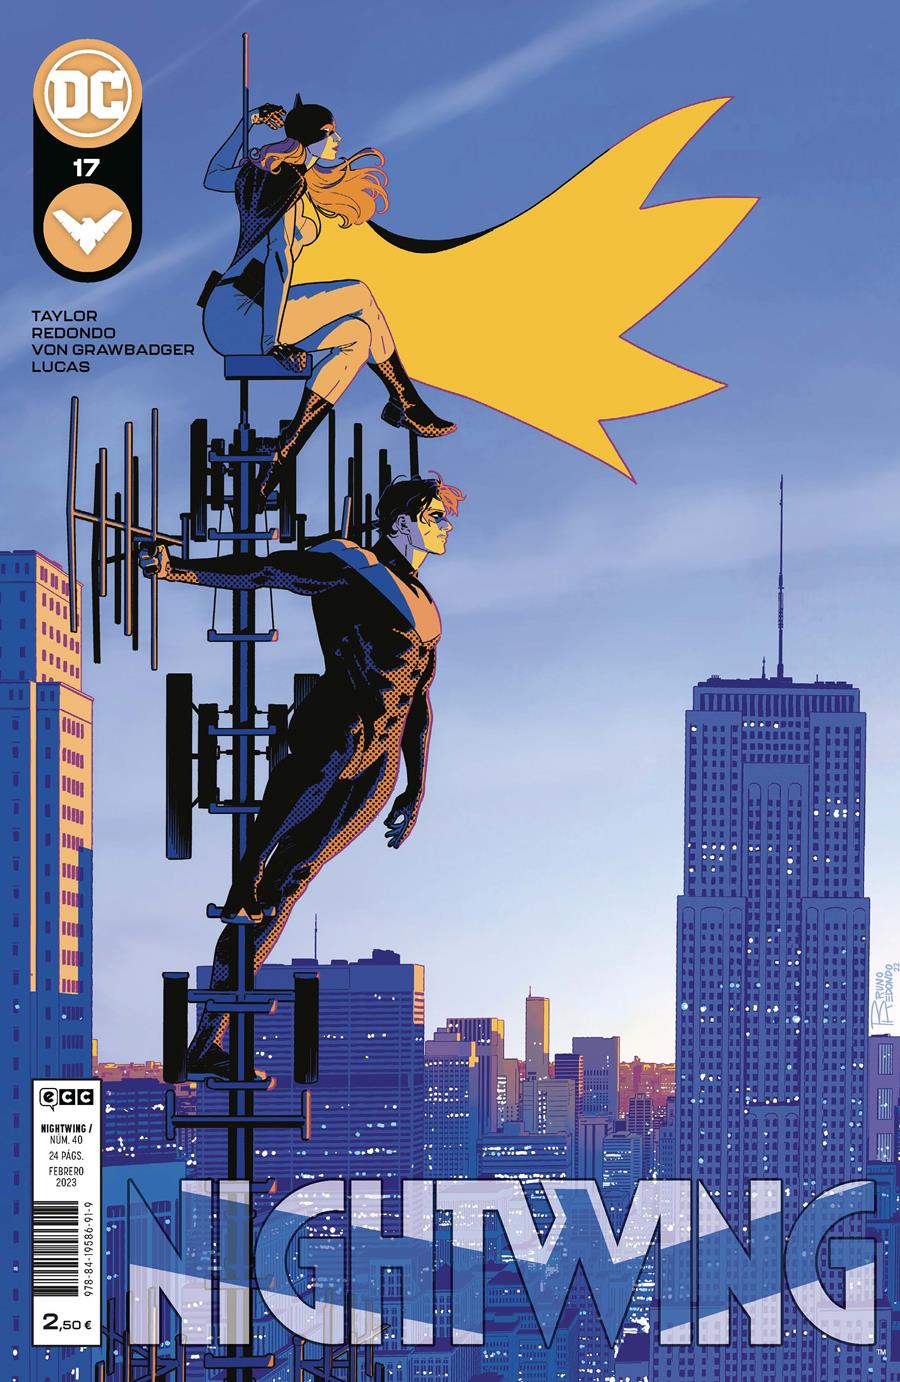 Nightwing núm. 17 | N0223-ECC21 | Bruno Redondo / Tom Taylor | Terra de Còmic - Tu tienda de cómics online especializada en cómics, manga y merchandising